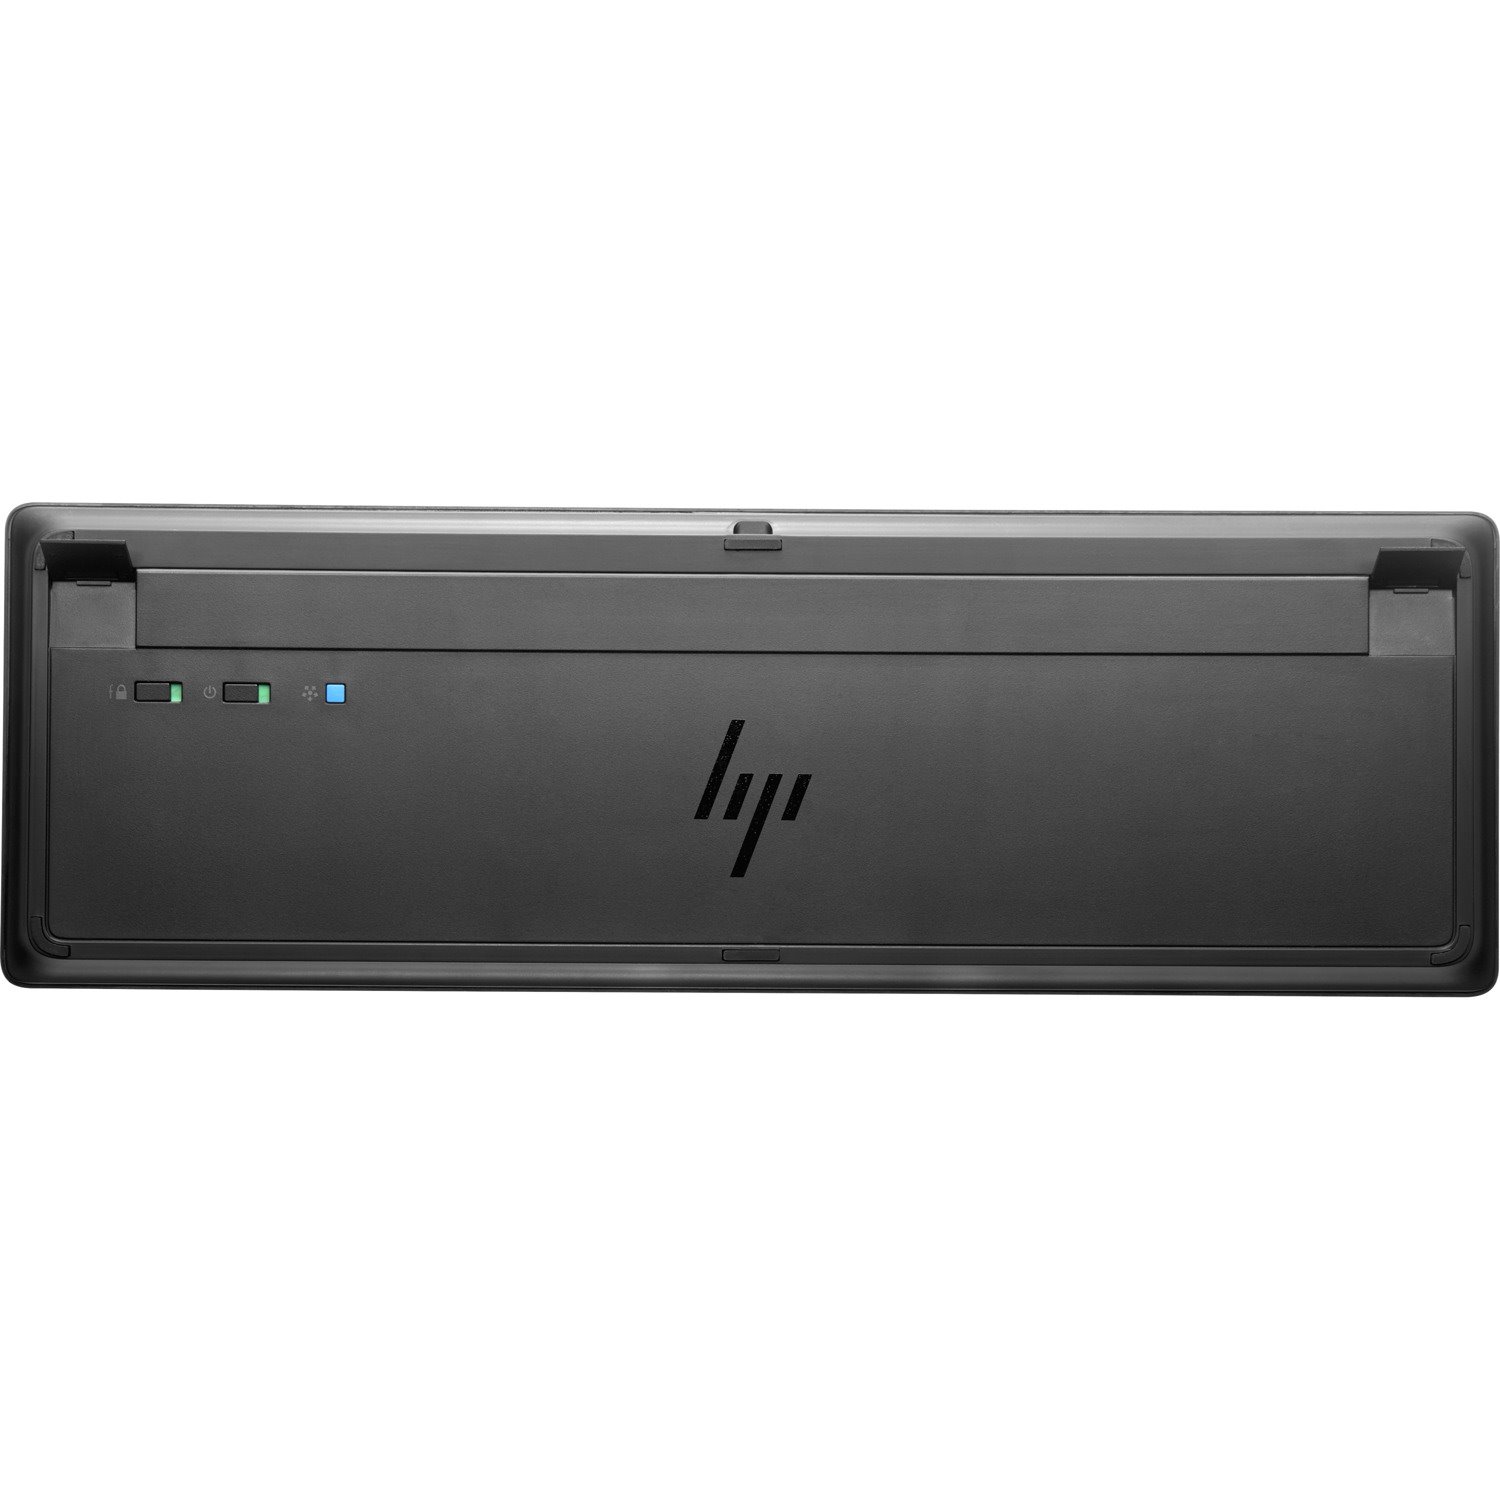 HP Z9N41AA Keyboard - Wireless Connectivity - USB Interface - Black